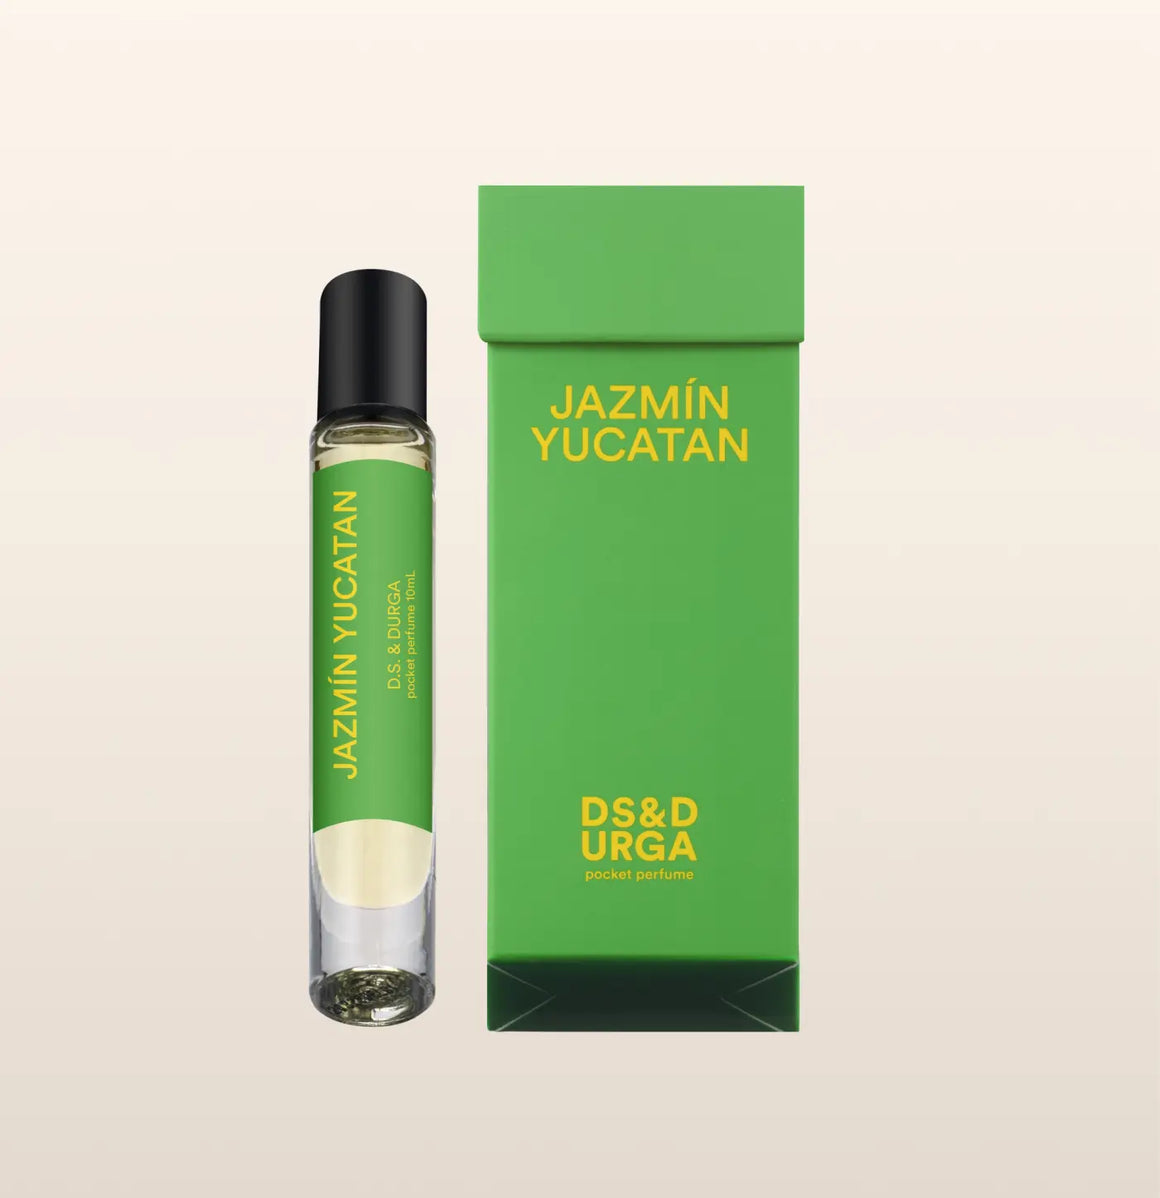 DS & Durga - Jazmin Yucatan Pocket Perfume